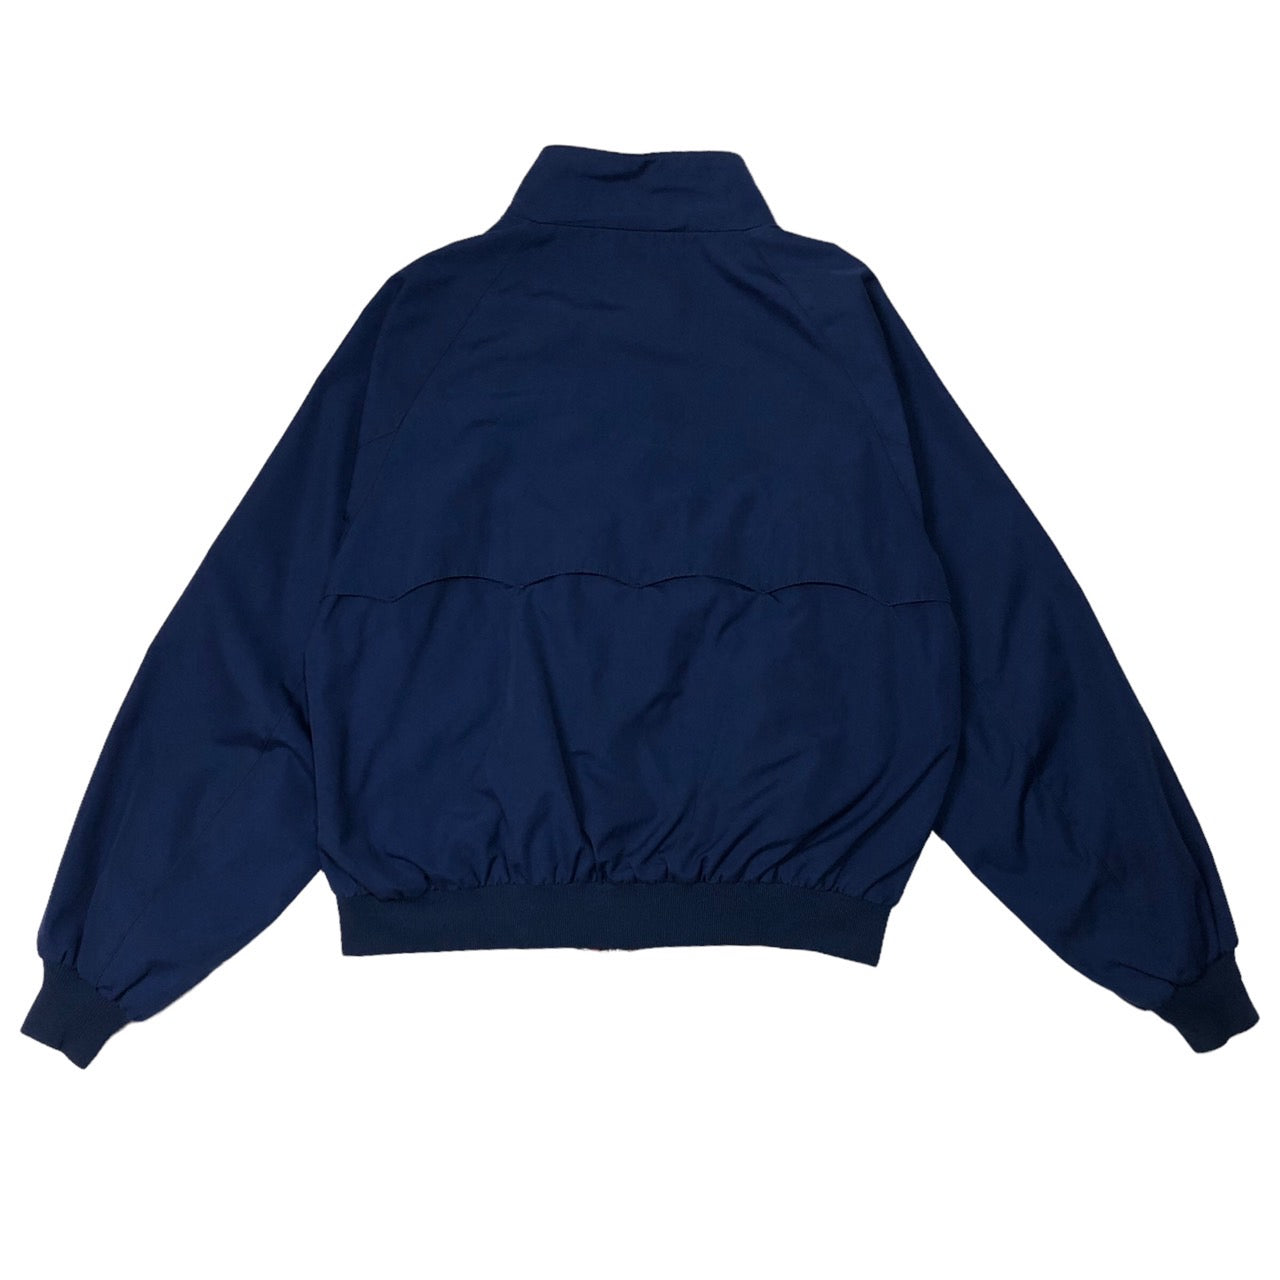 BARACUTA by VAN HEUSEN(バラクータバンヒューゼン) 80's G9 jacket